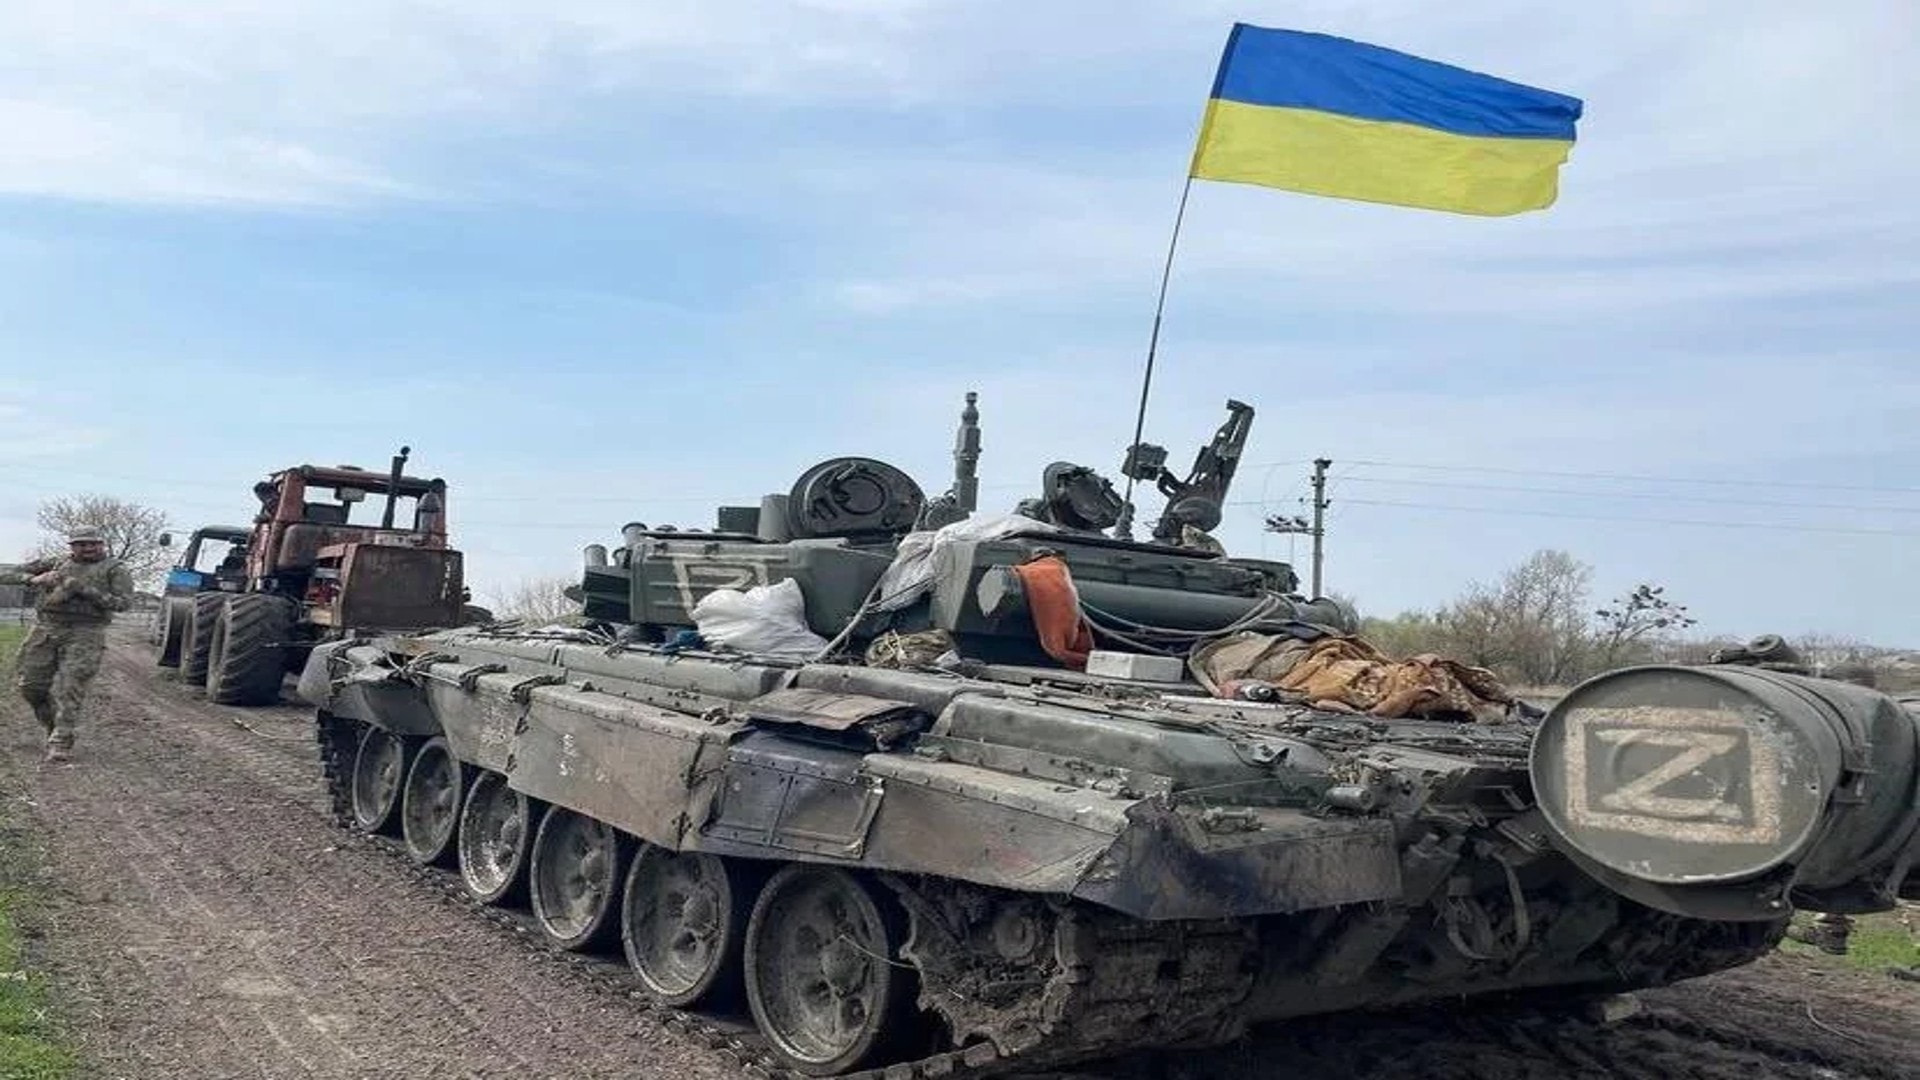 https://s1.cdn.autoevolution.com/images/news/ukrainian-soldiers-capture-russian-t-72-tank-call-ruski-customer-support-when-it-breaks-222117_1.jpg